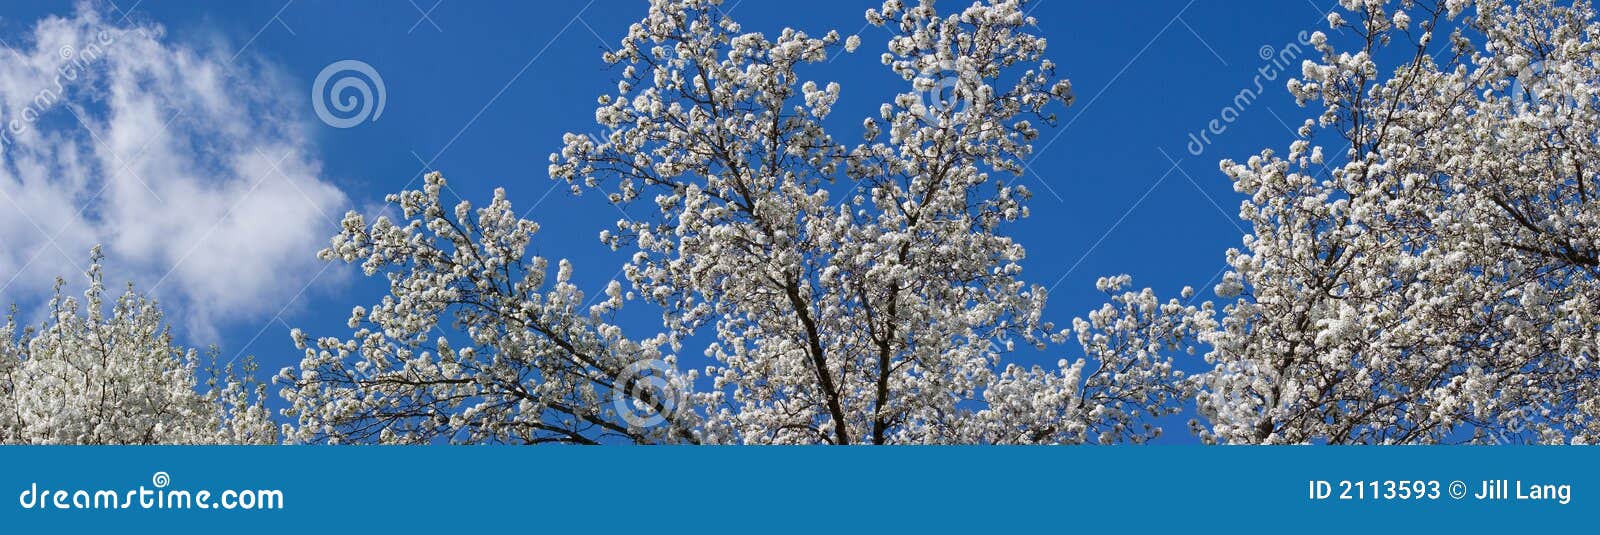 panorama of bradford pear tree blooms